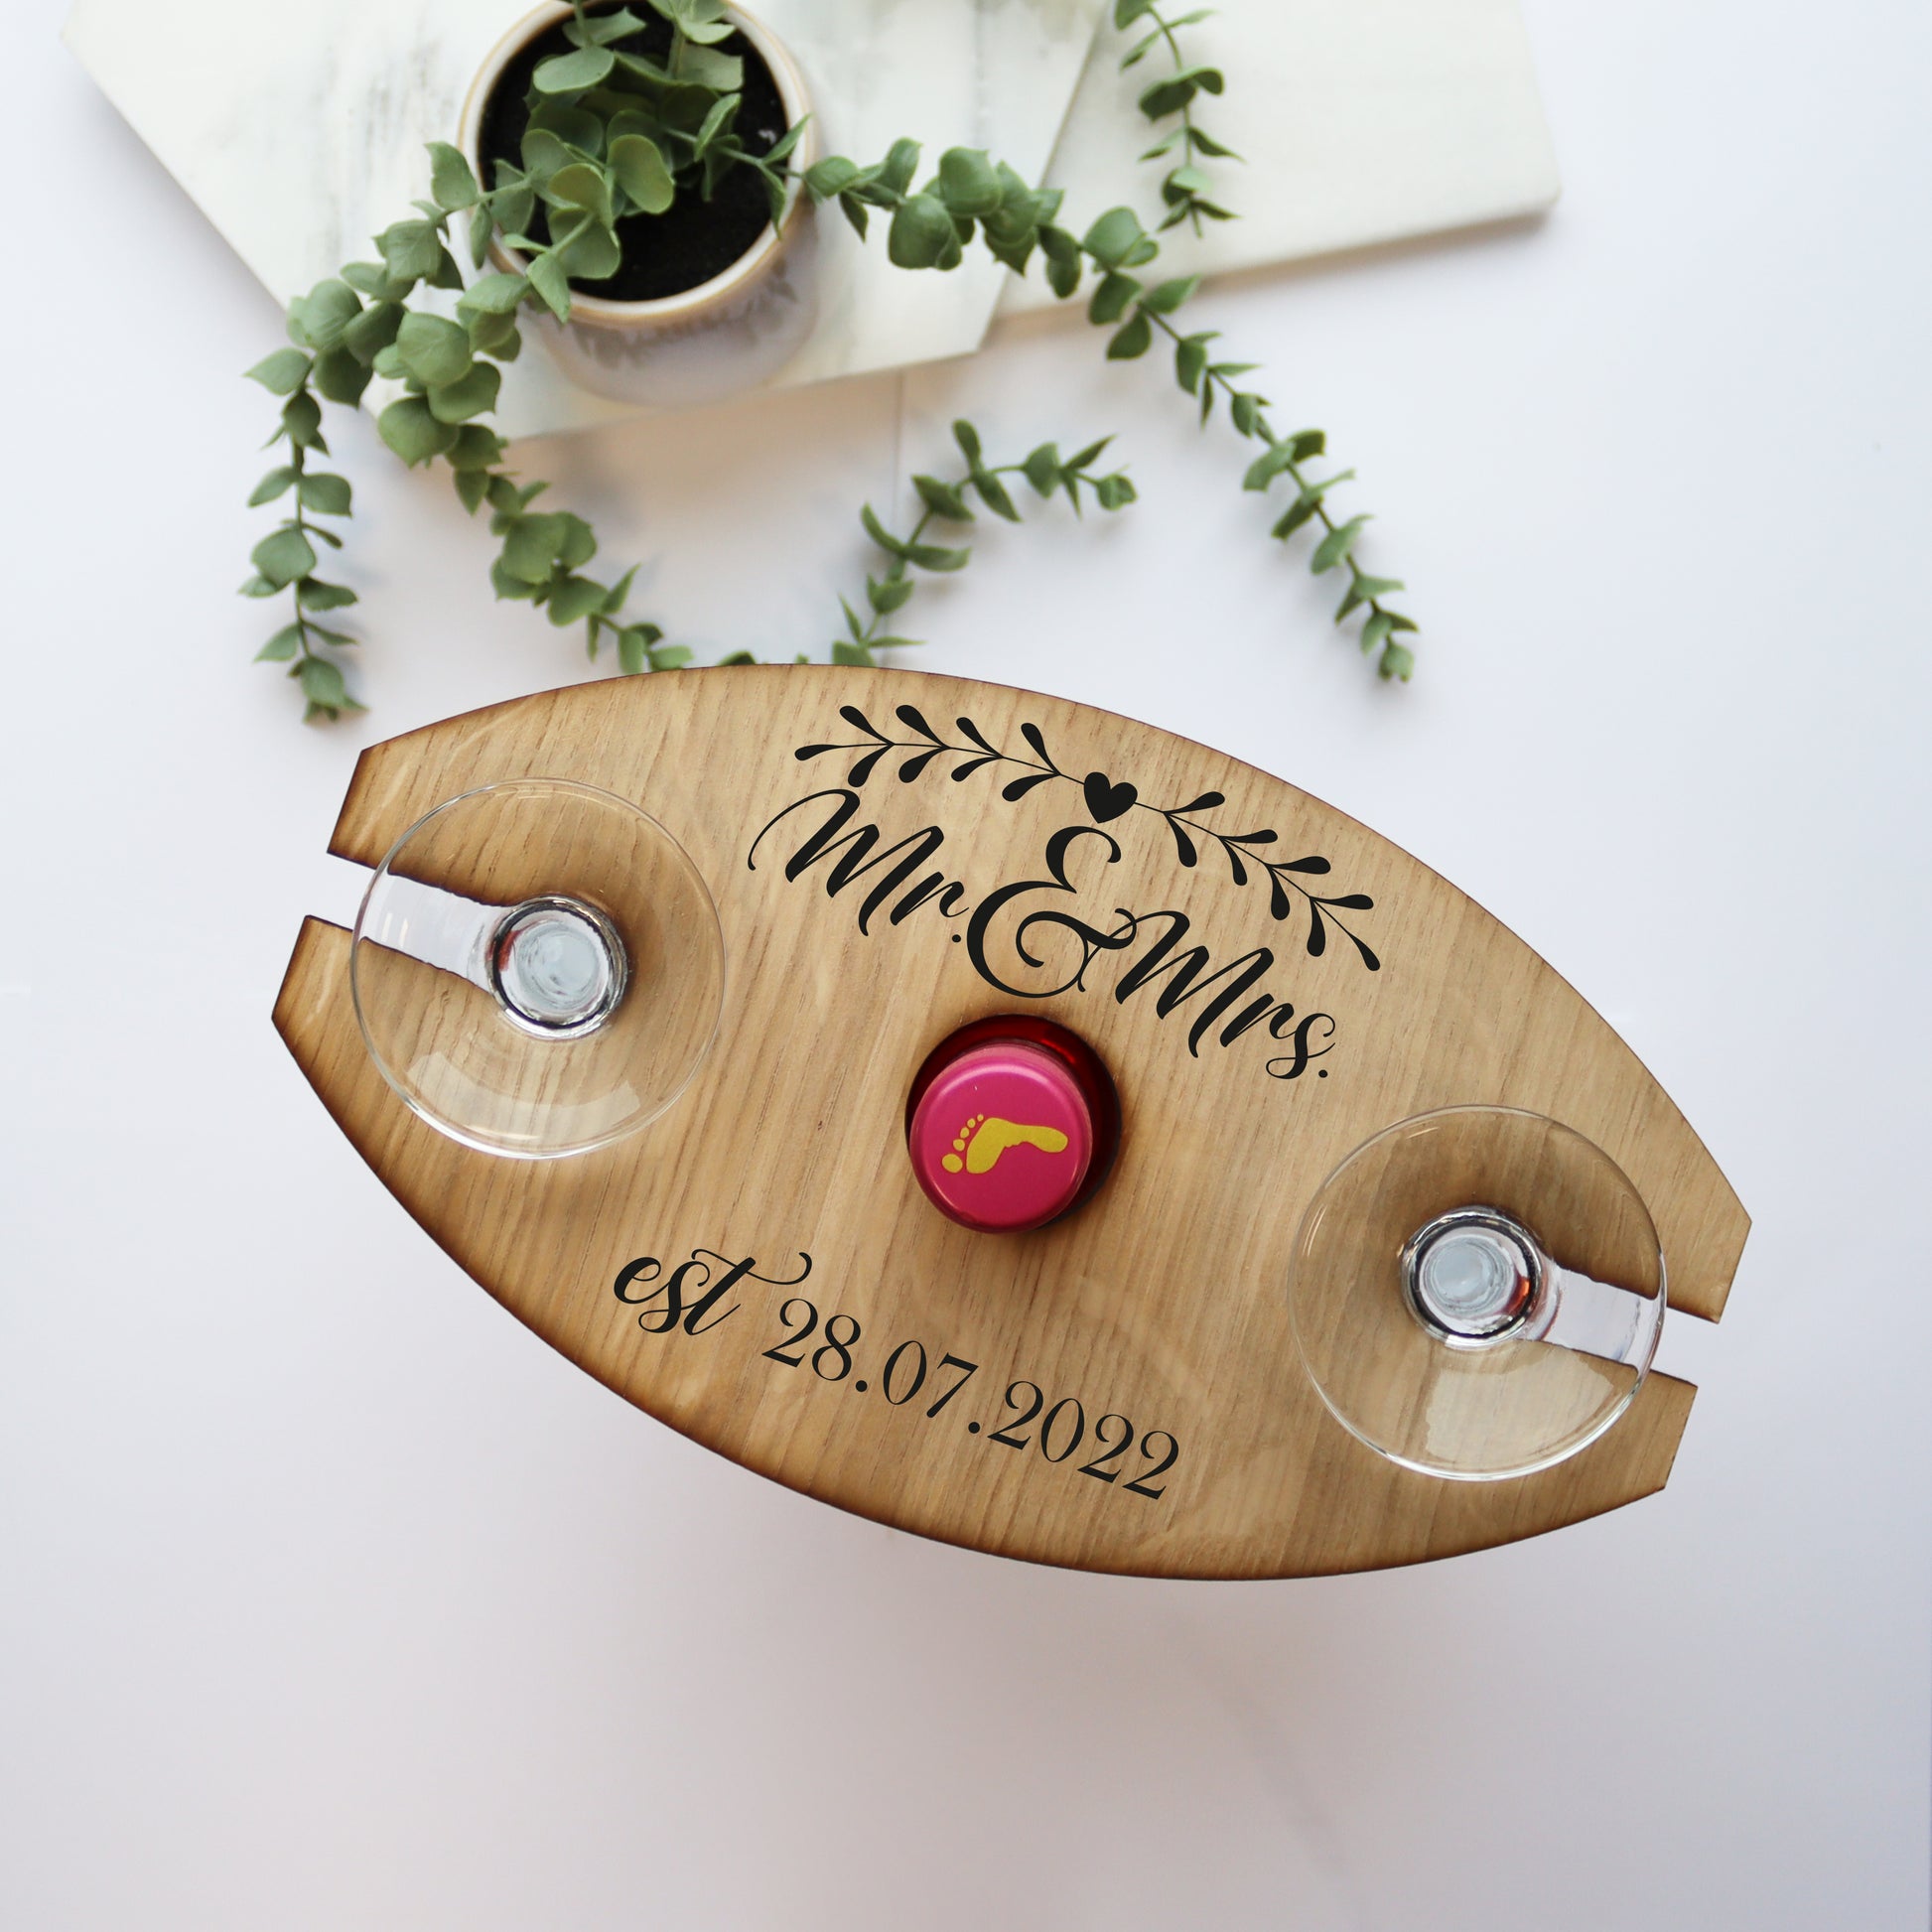 mr & mrs wooden wine butler wine bottle holder and wine glass holder wedding gift personalised